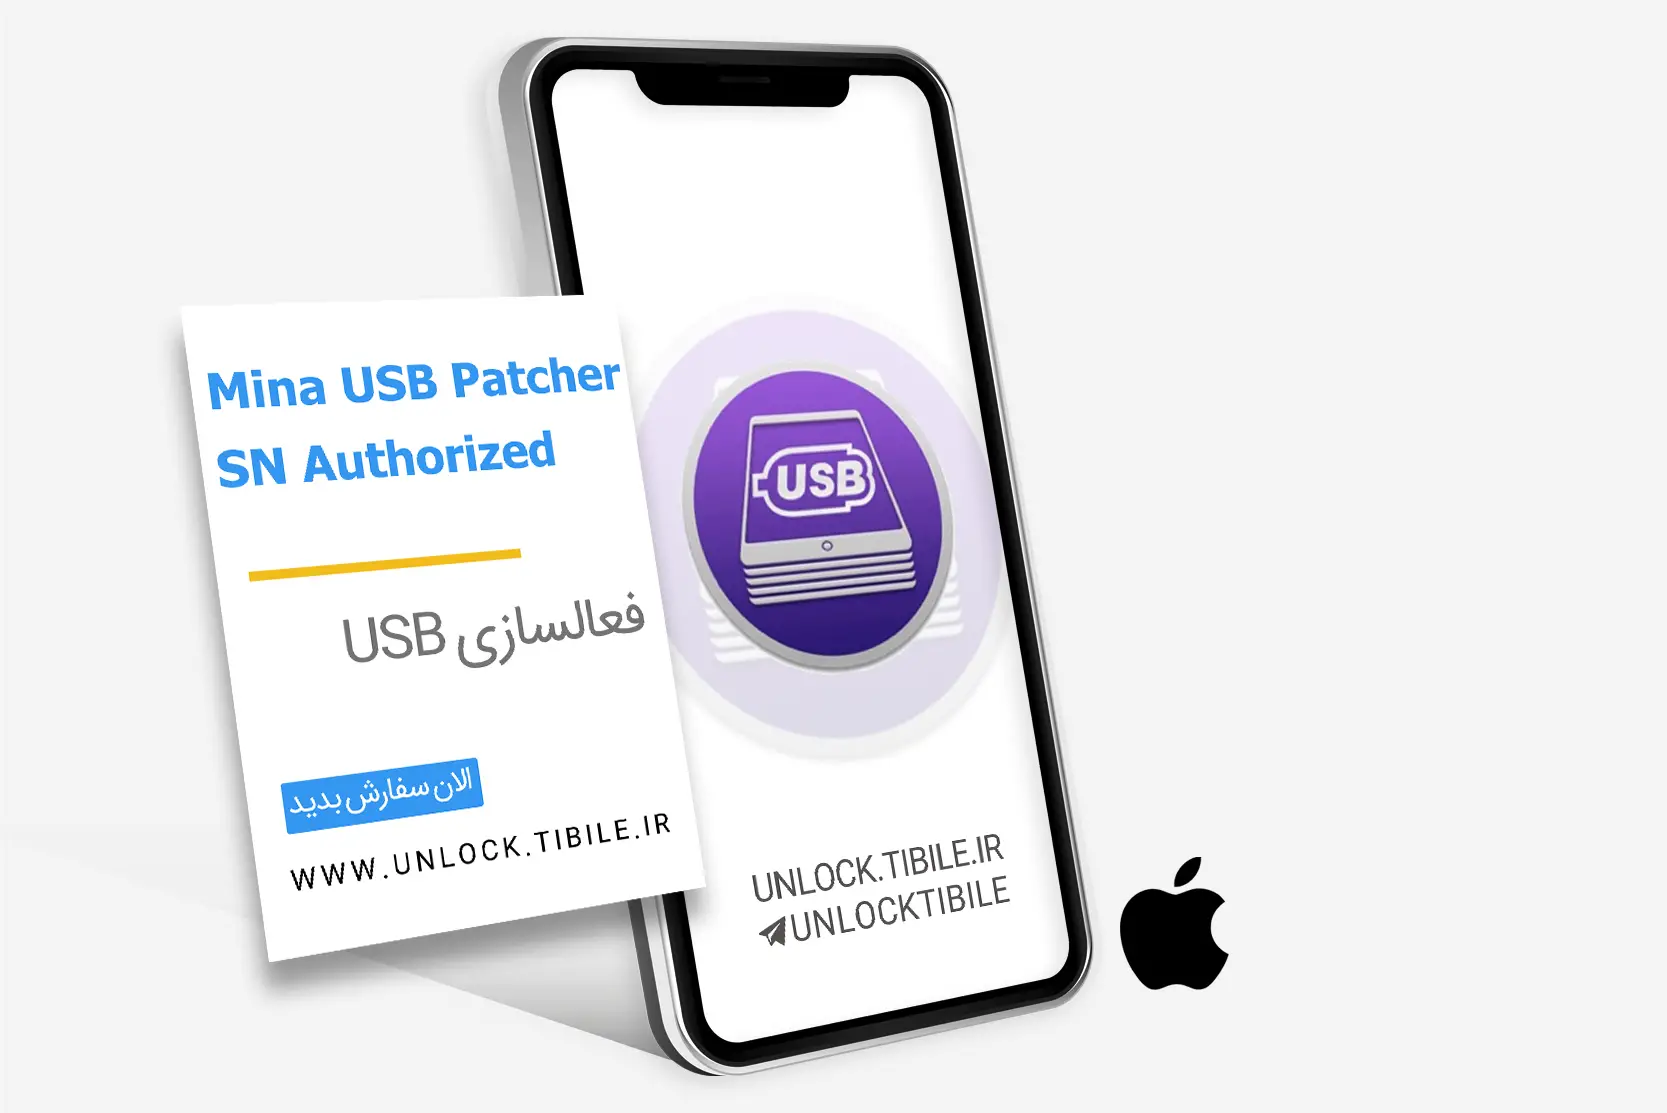 Mina USB Patcher